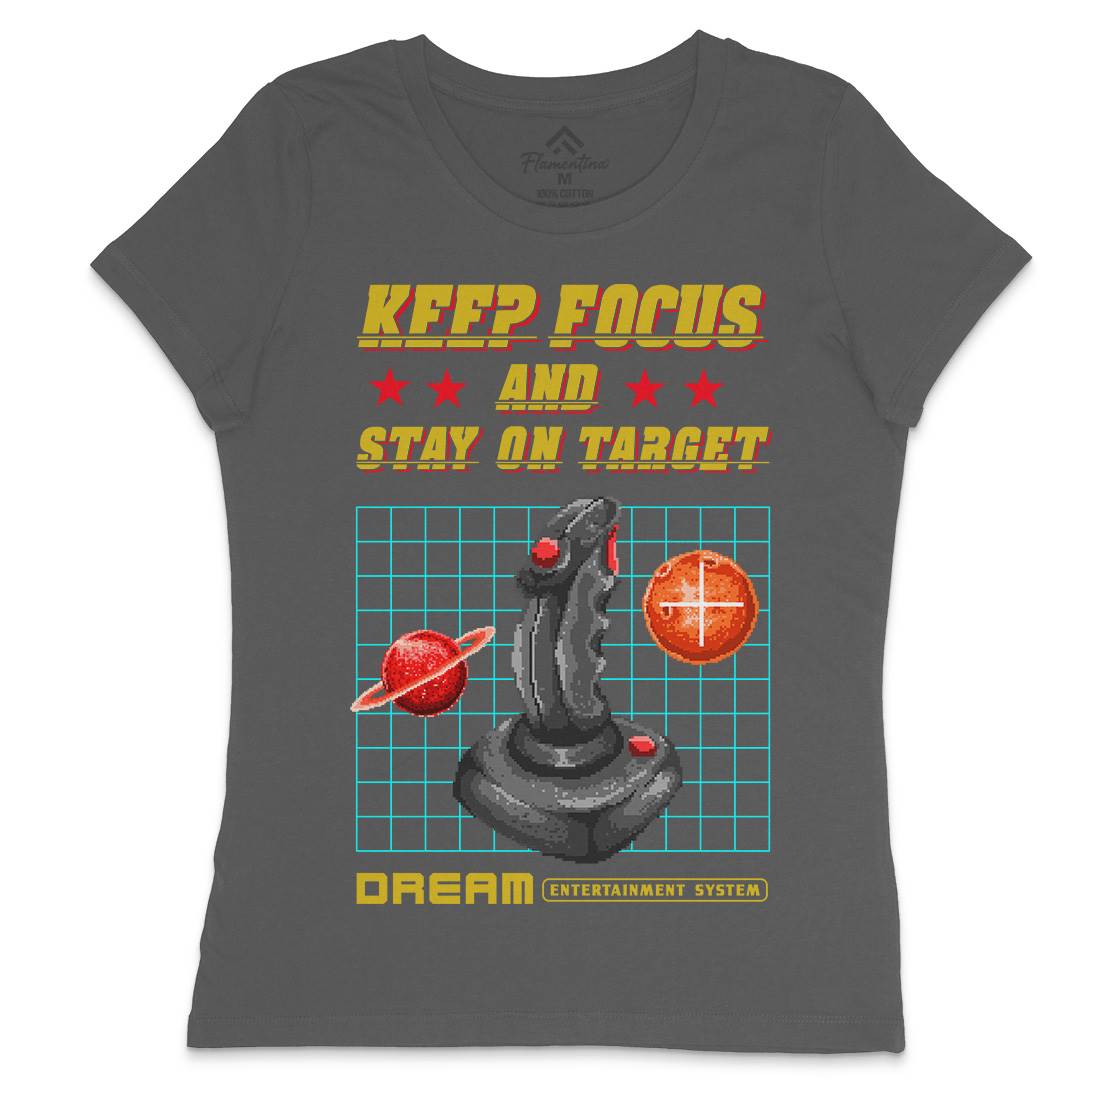 Stay On Target Womens Crew Neck T-Shirt Geek B959